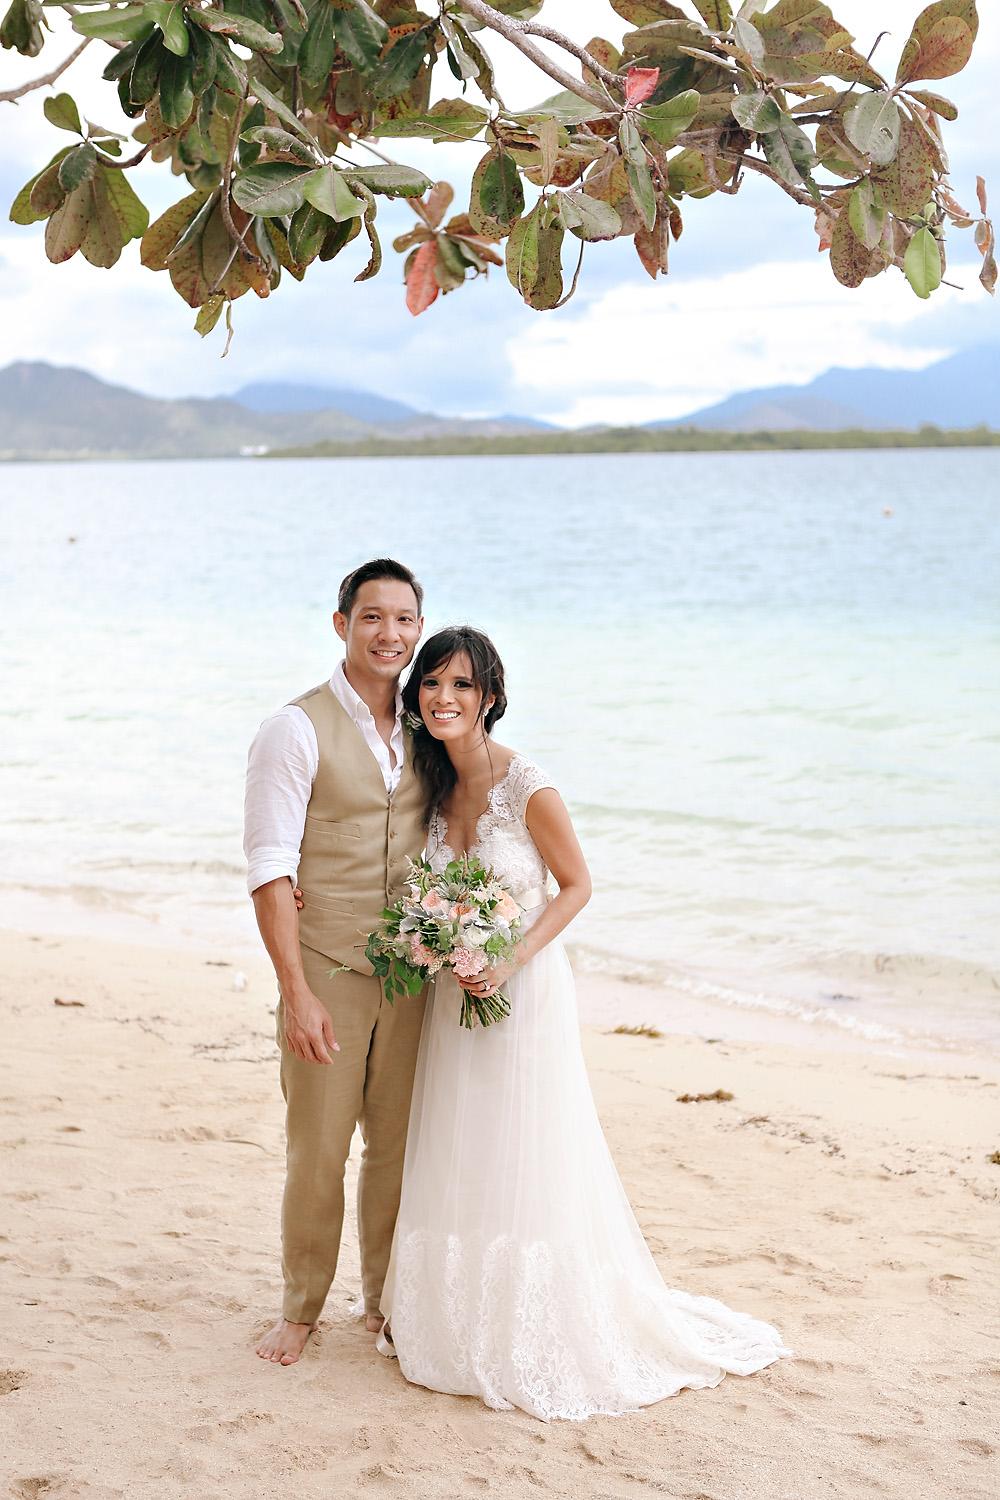 Philippines Destination Wedding on a Private Island